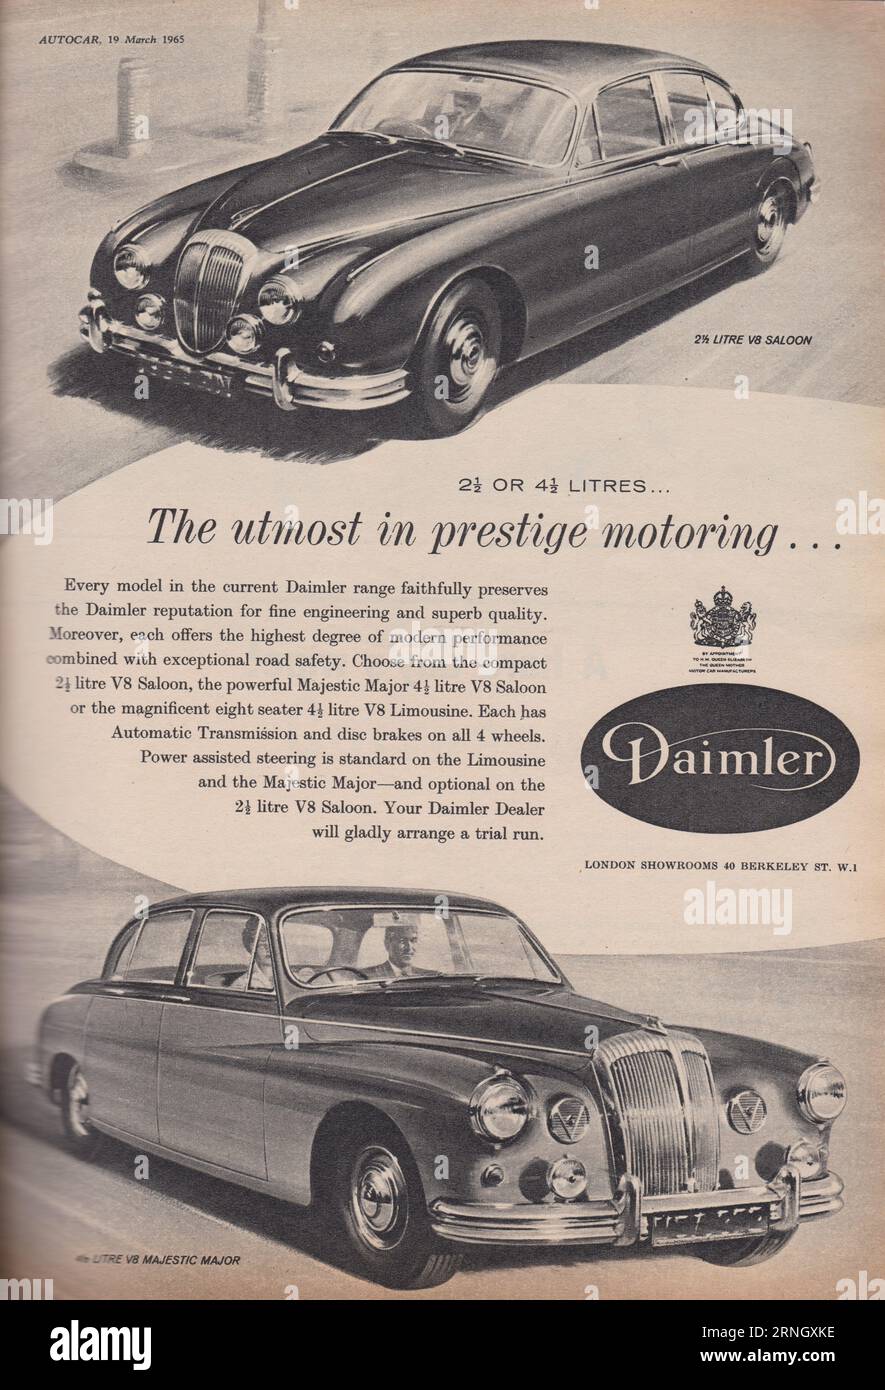 Daimler vintage advert. Stock Photo